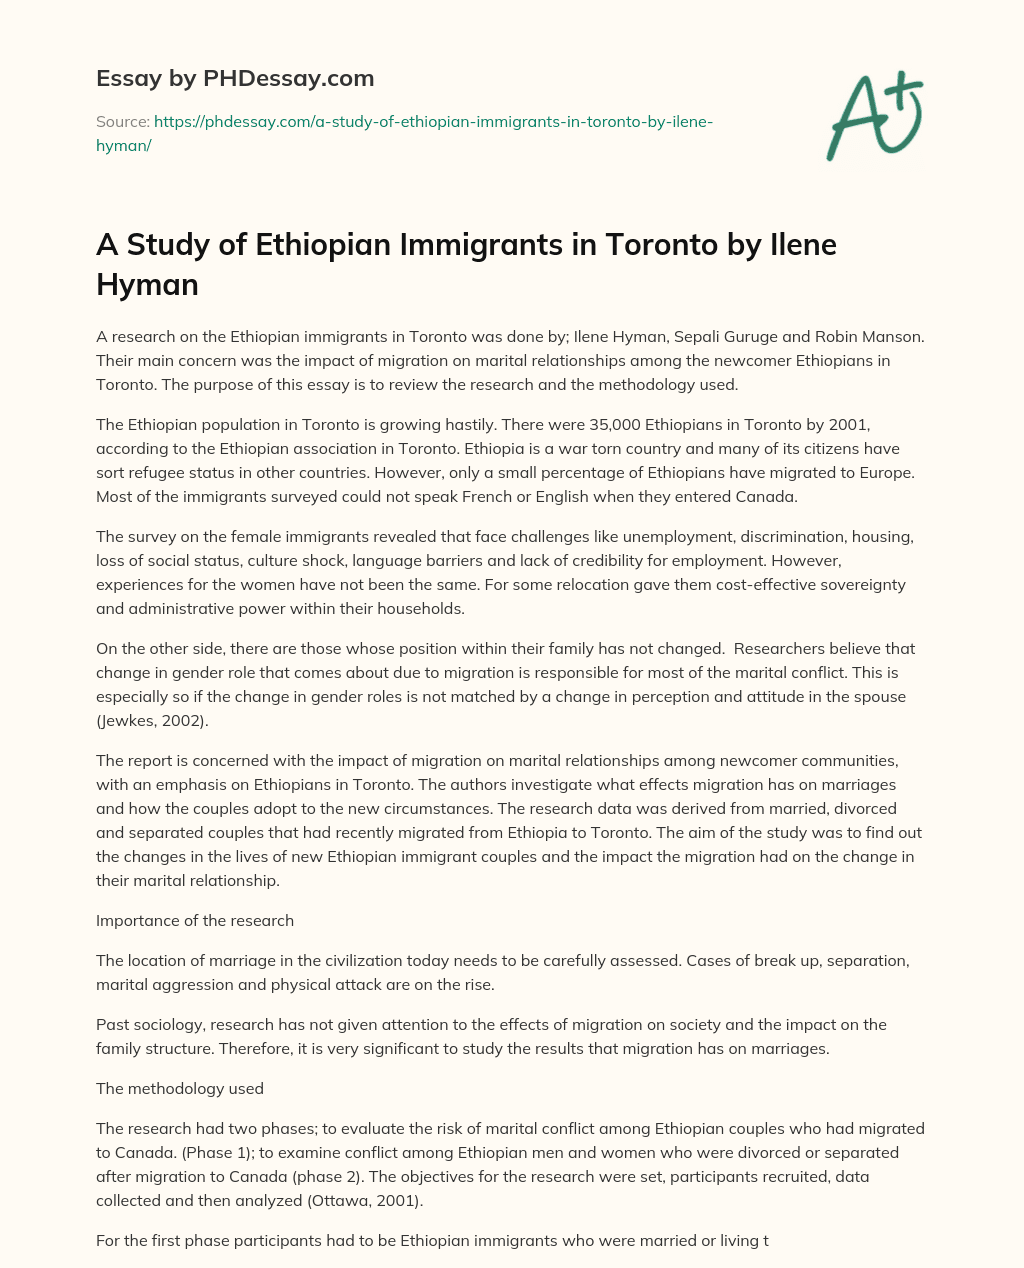 A Study of Ethiopian Immigrants in Toronto by Ilene Hyman essay